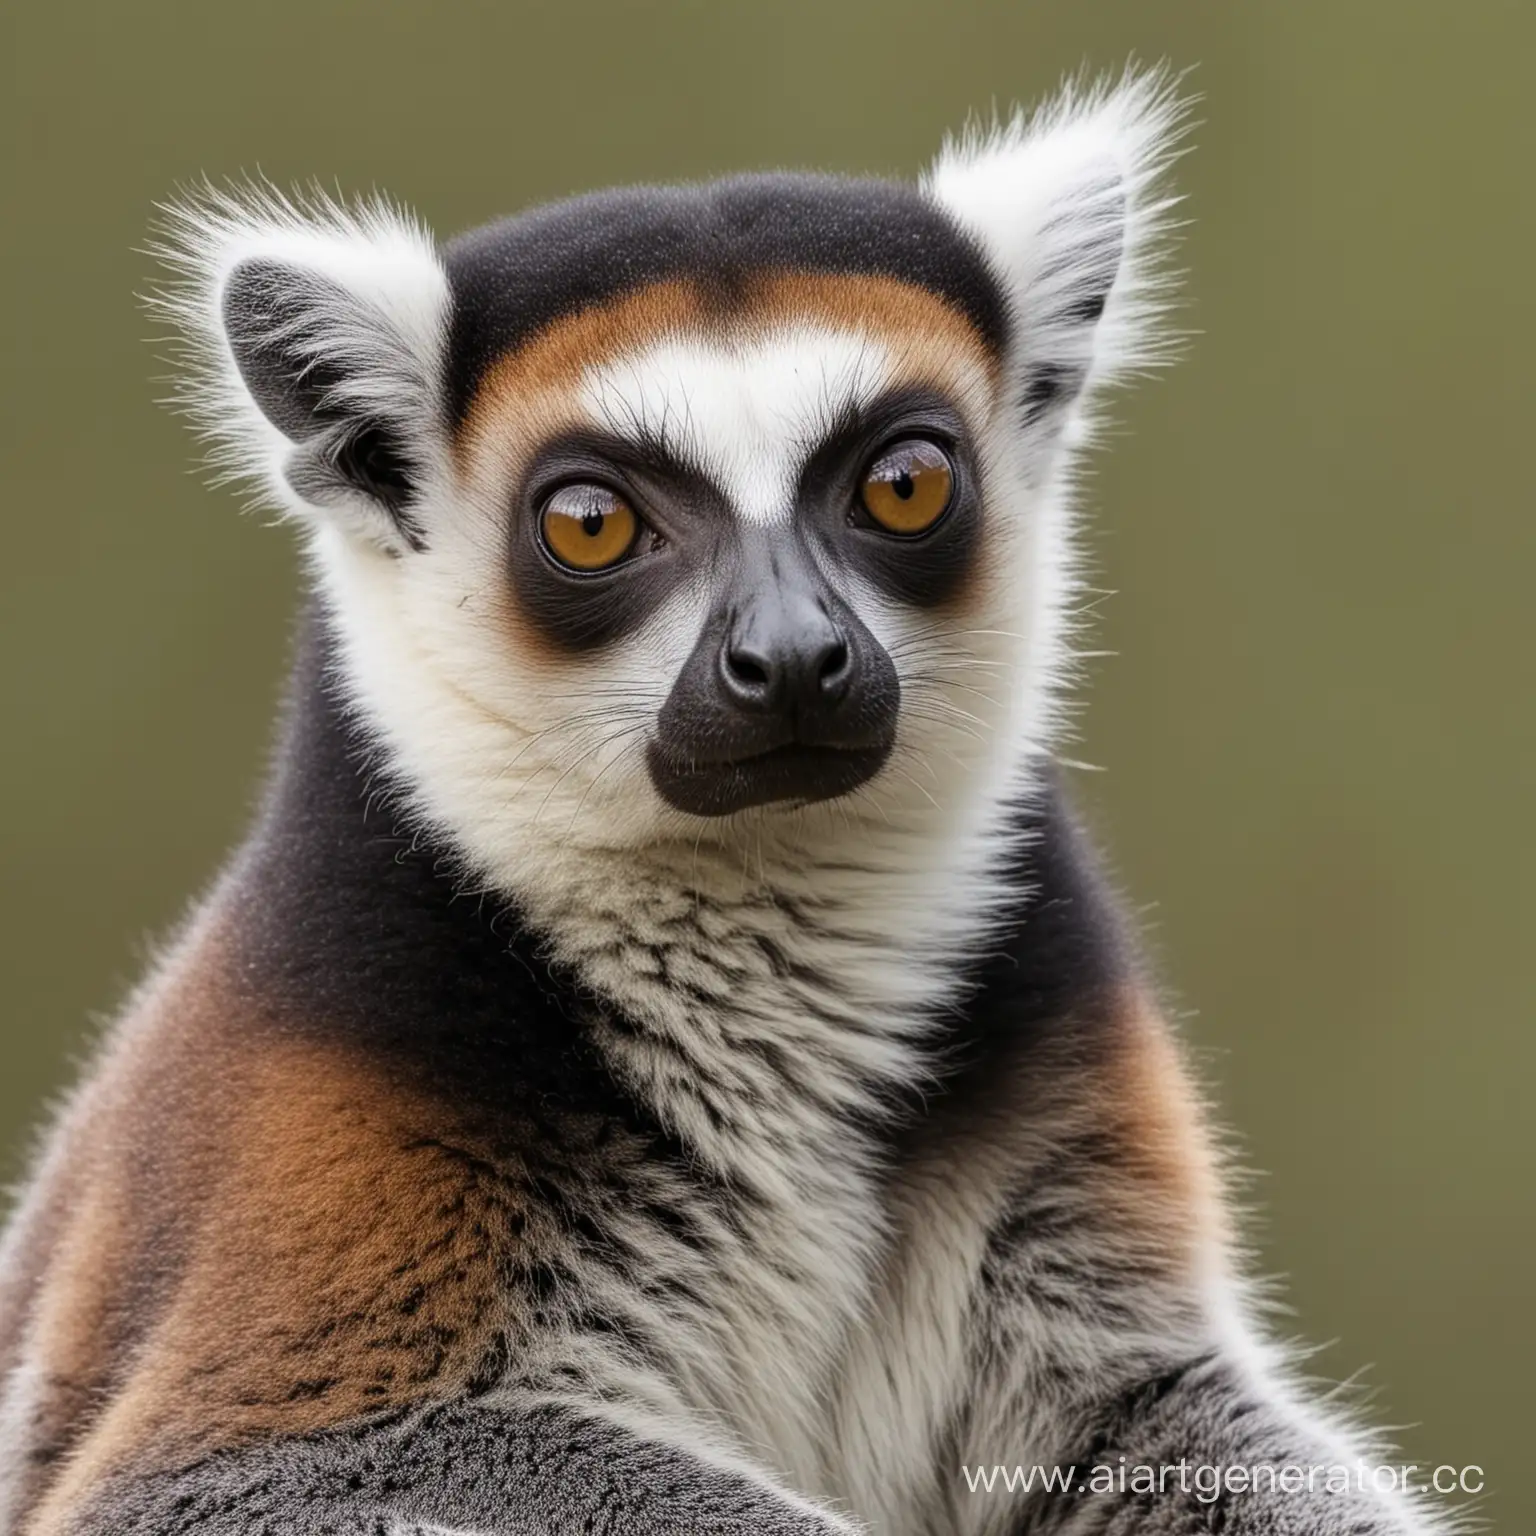 Playful-Lemur-in-Tropical-Forest-Habitat